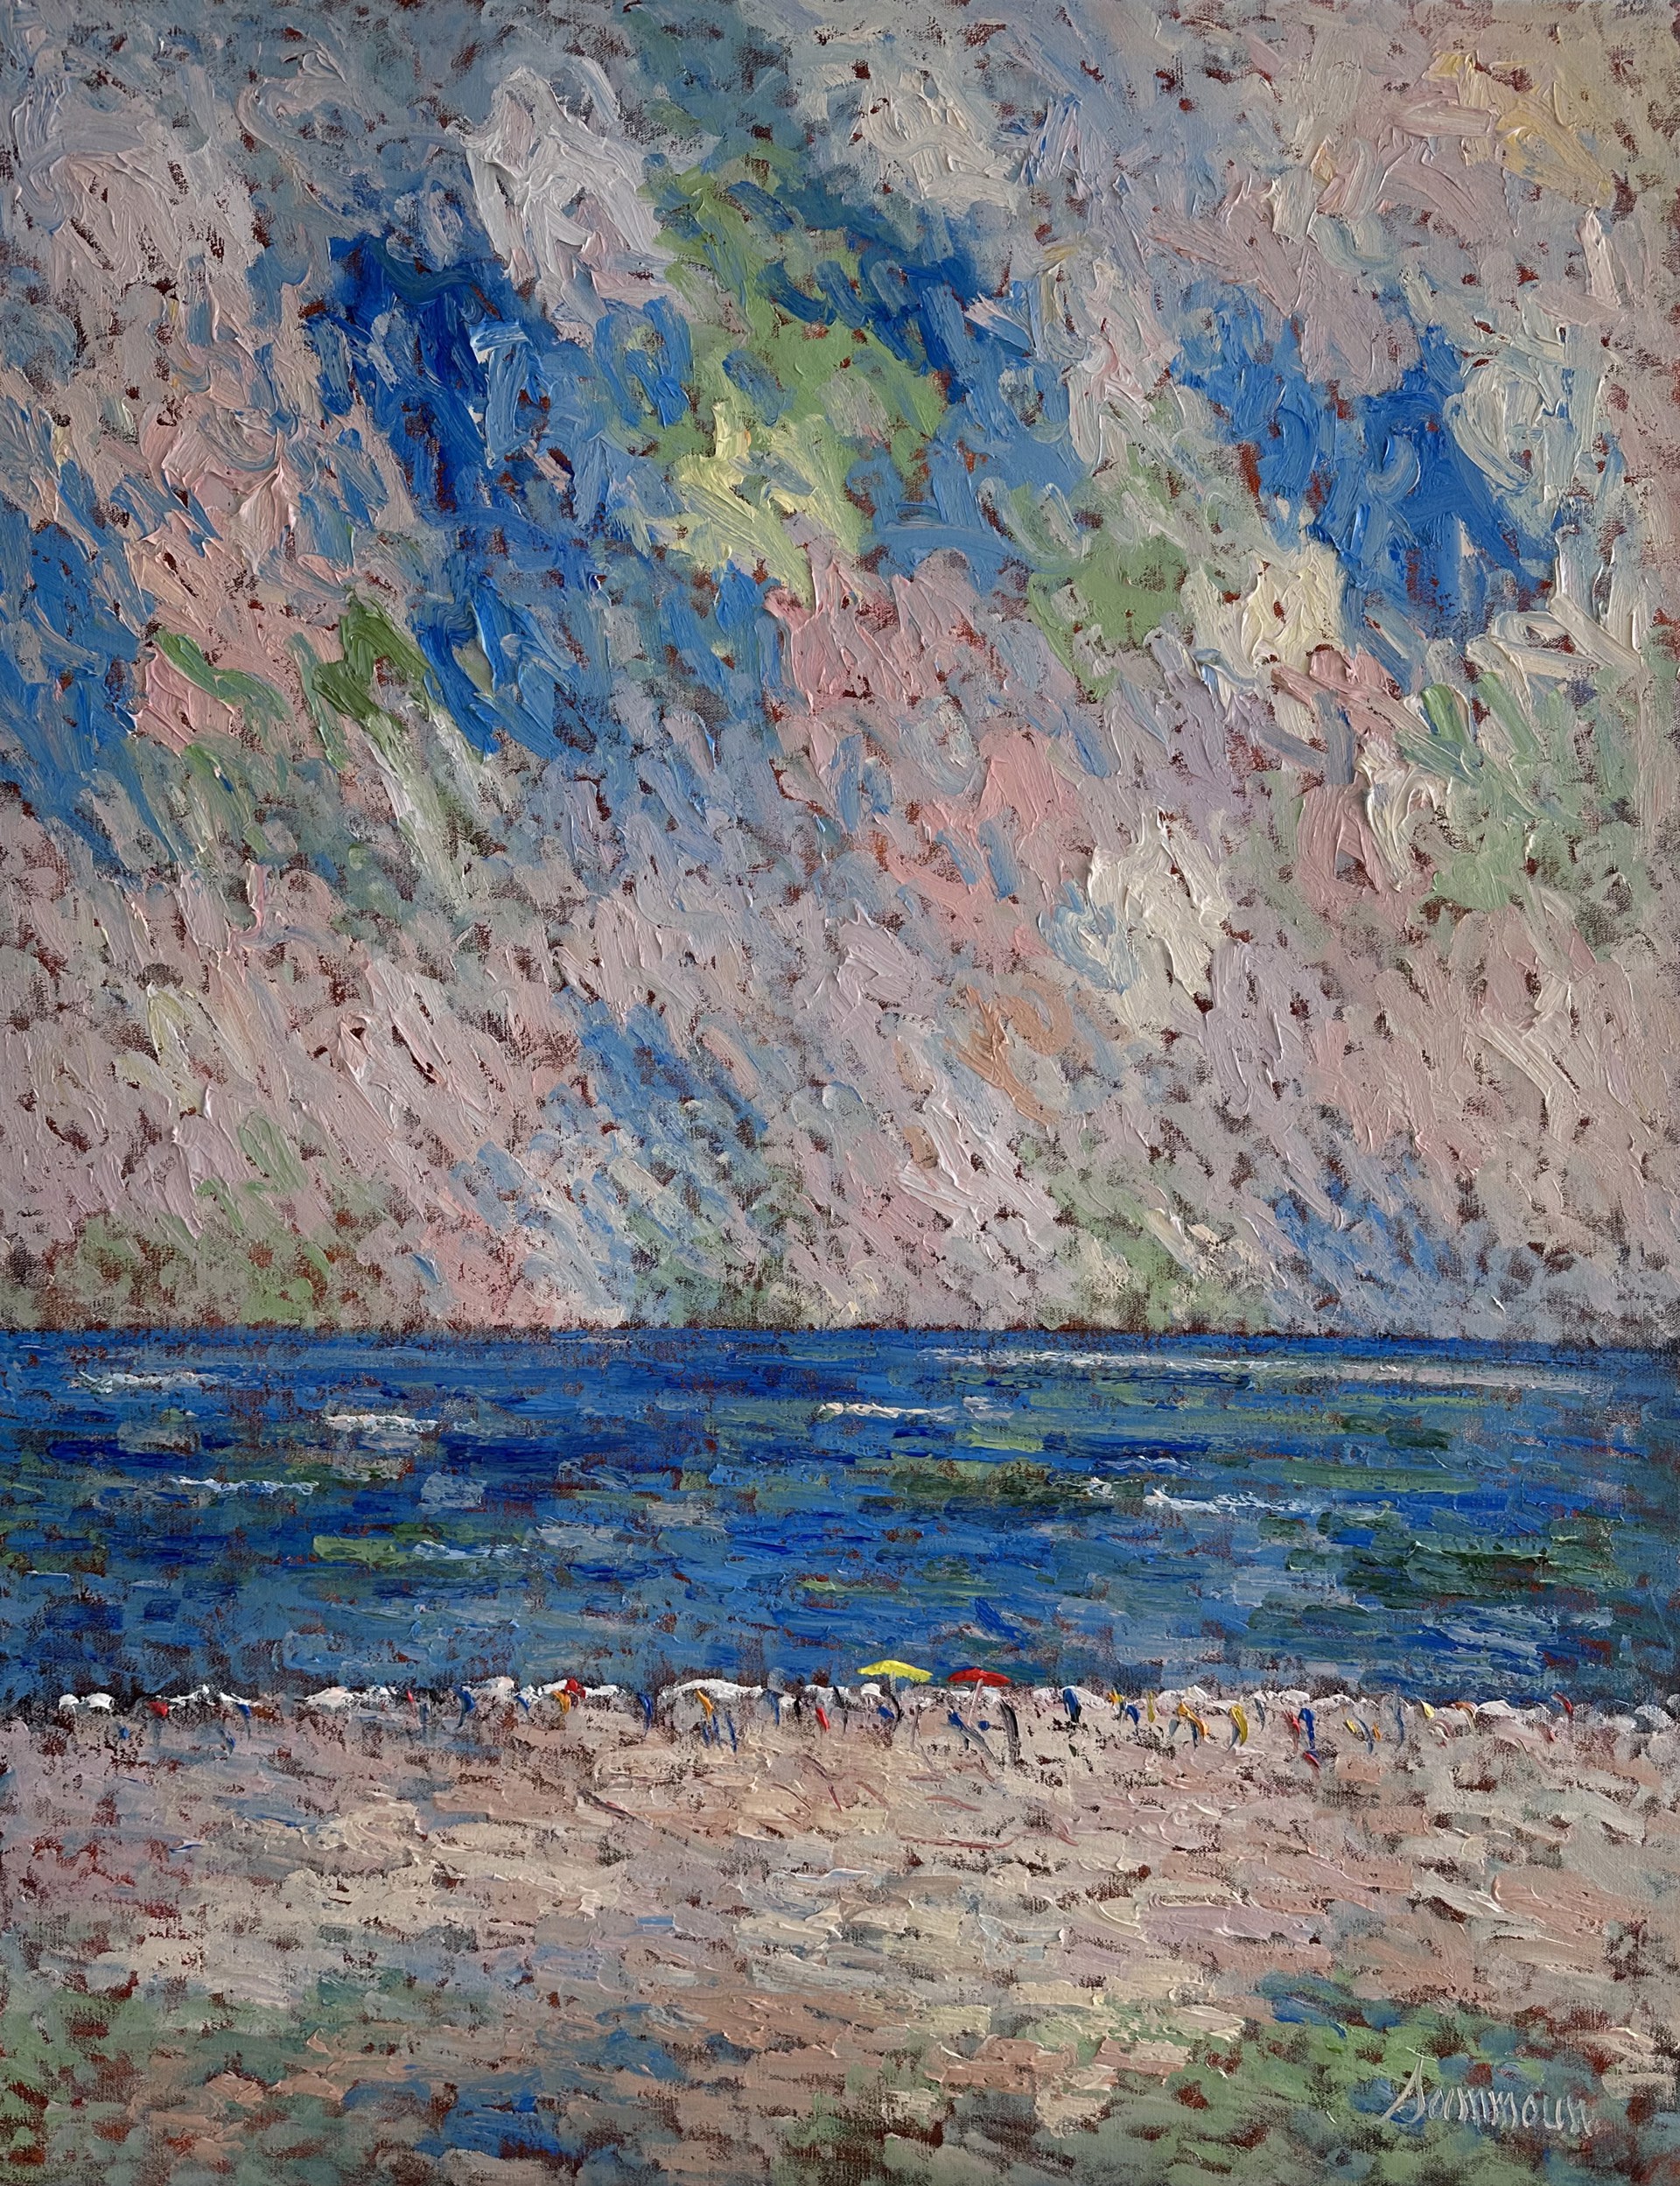 The beach, Two Umbrellas II, 48x36 by Samir Sammoun